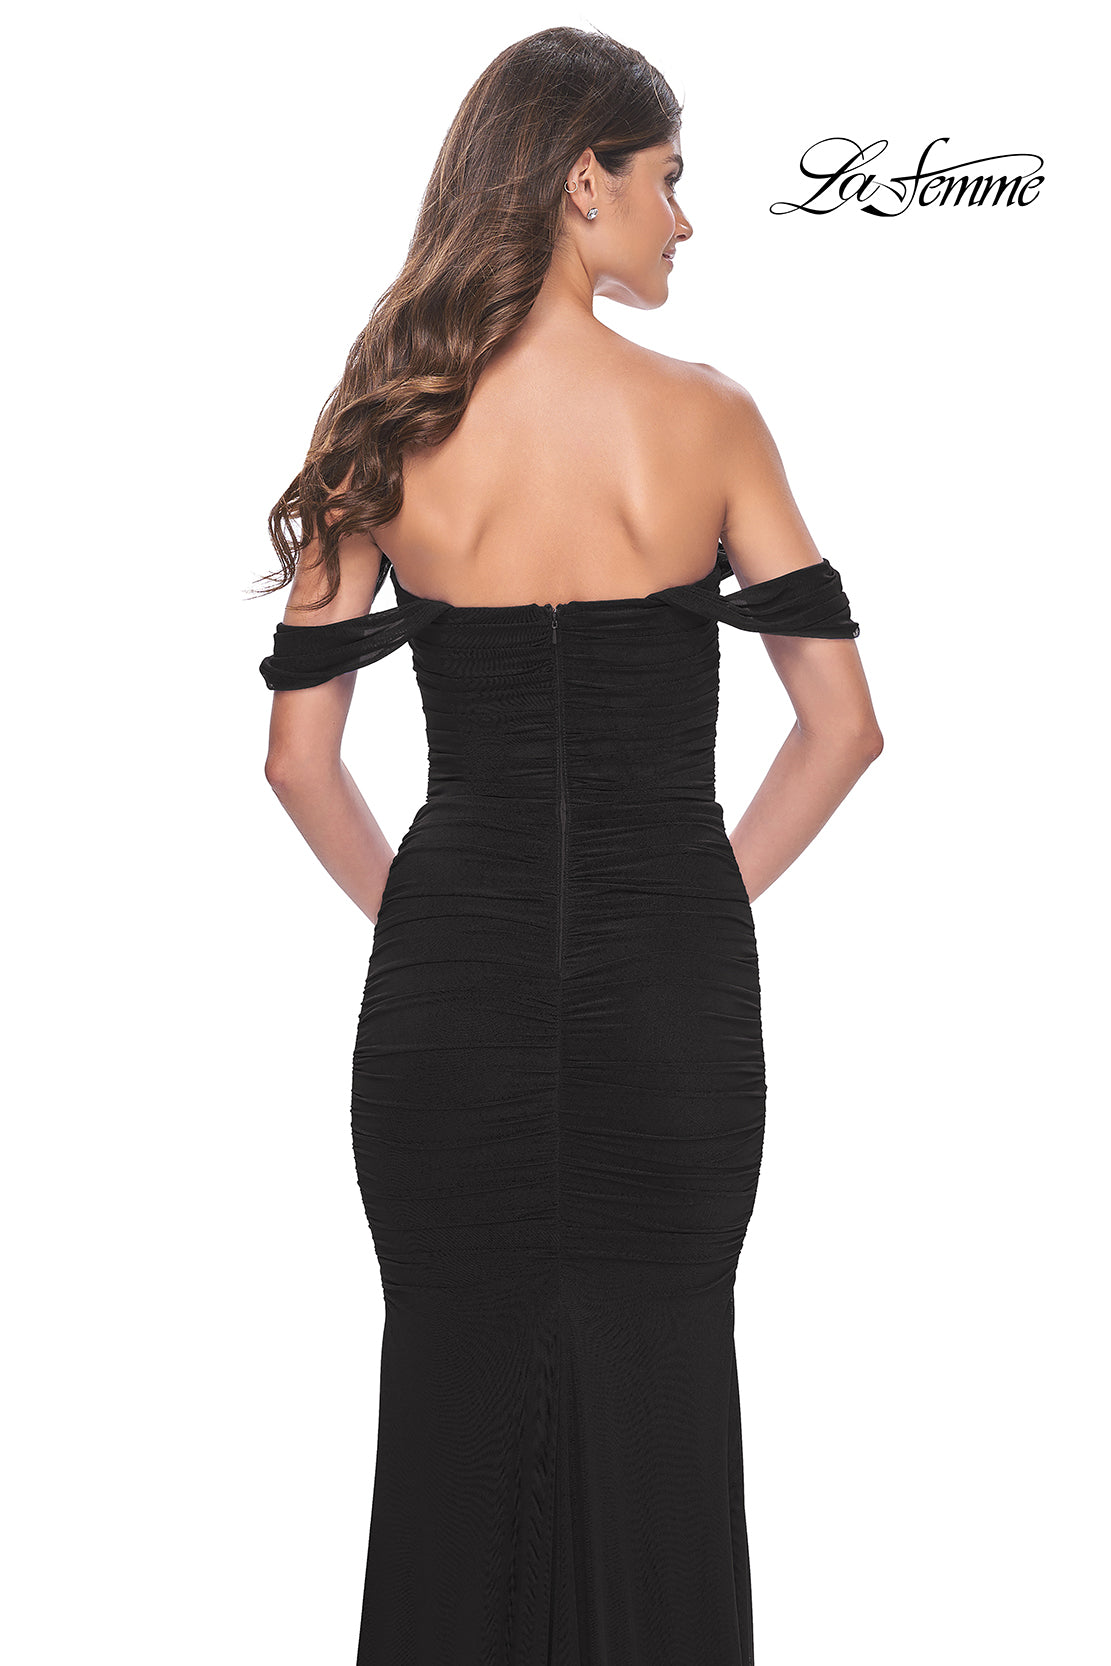 La-Femme-31914-Sweetheart-Neckline-Zipper-Back-Corset-Net-Jersey-Fitted-Black-Evening-Dress-B-Chic-Fashions-Prom-Dress